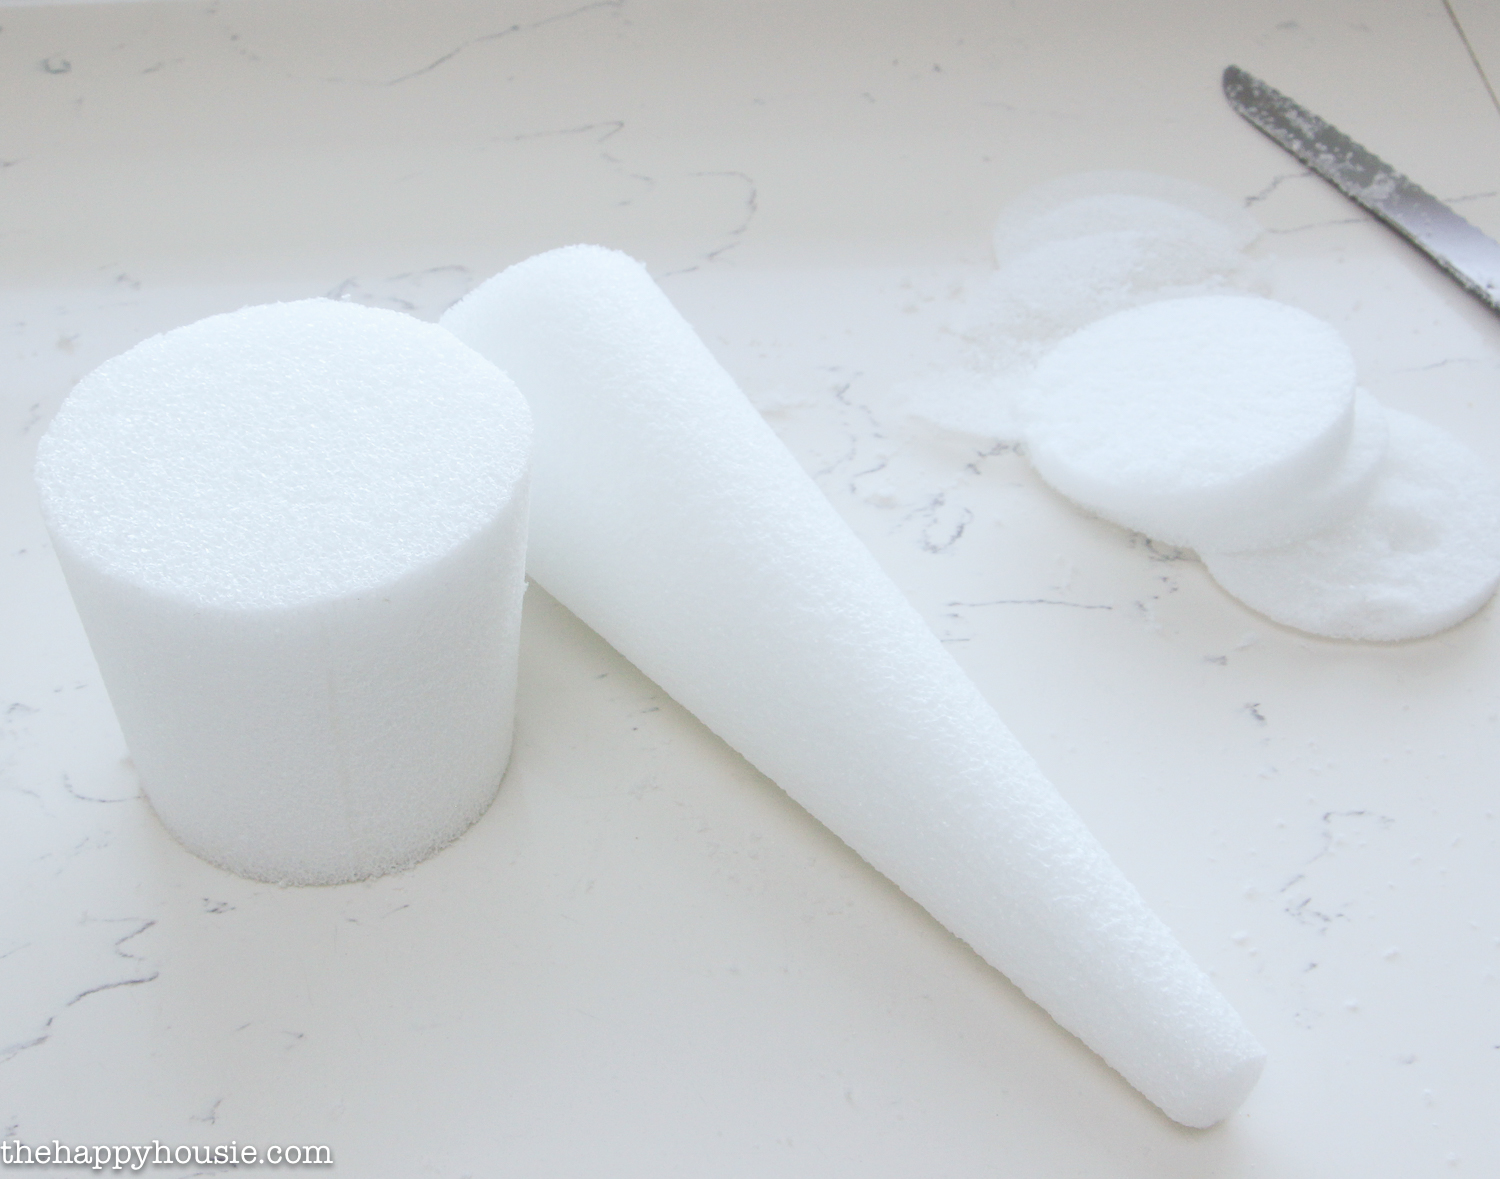 Three different shapes of styrofoam.